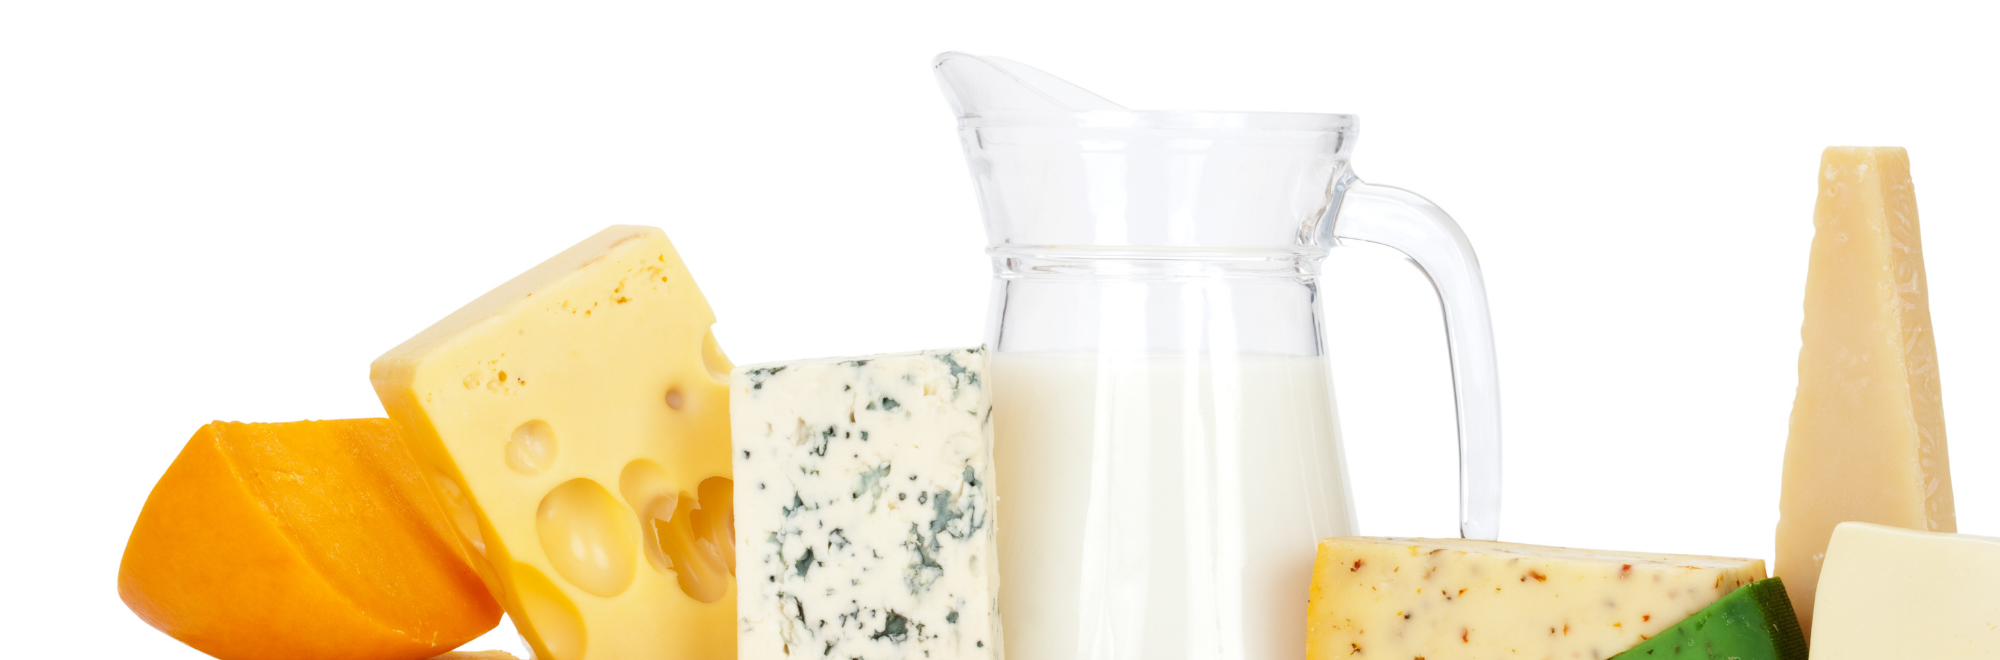 specialty foods - milk, cheese